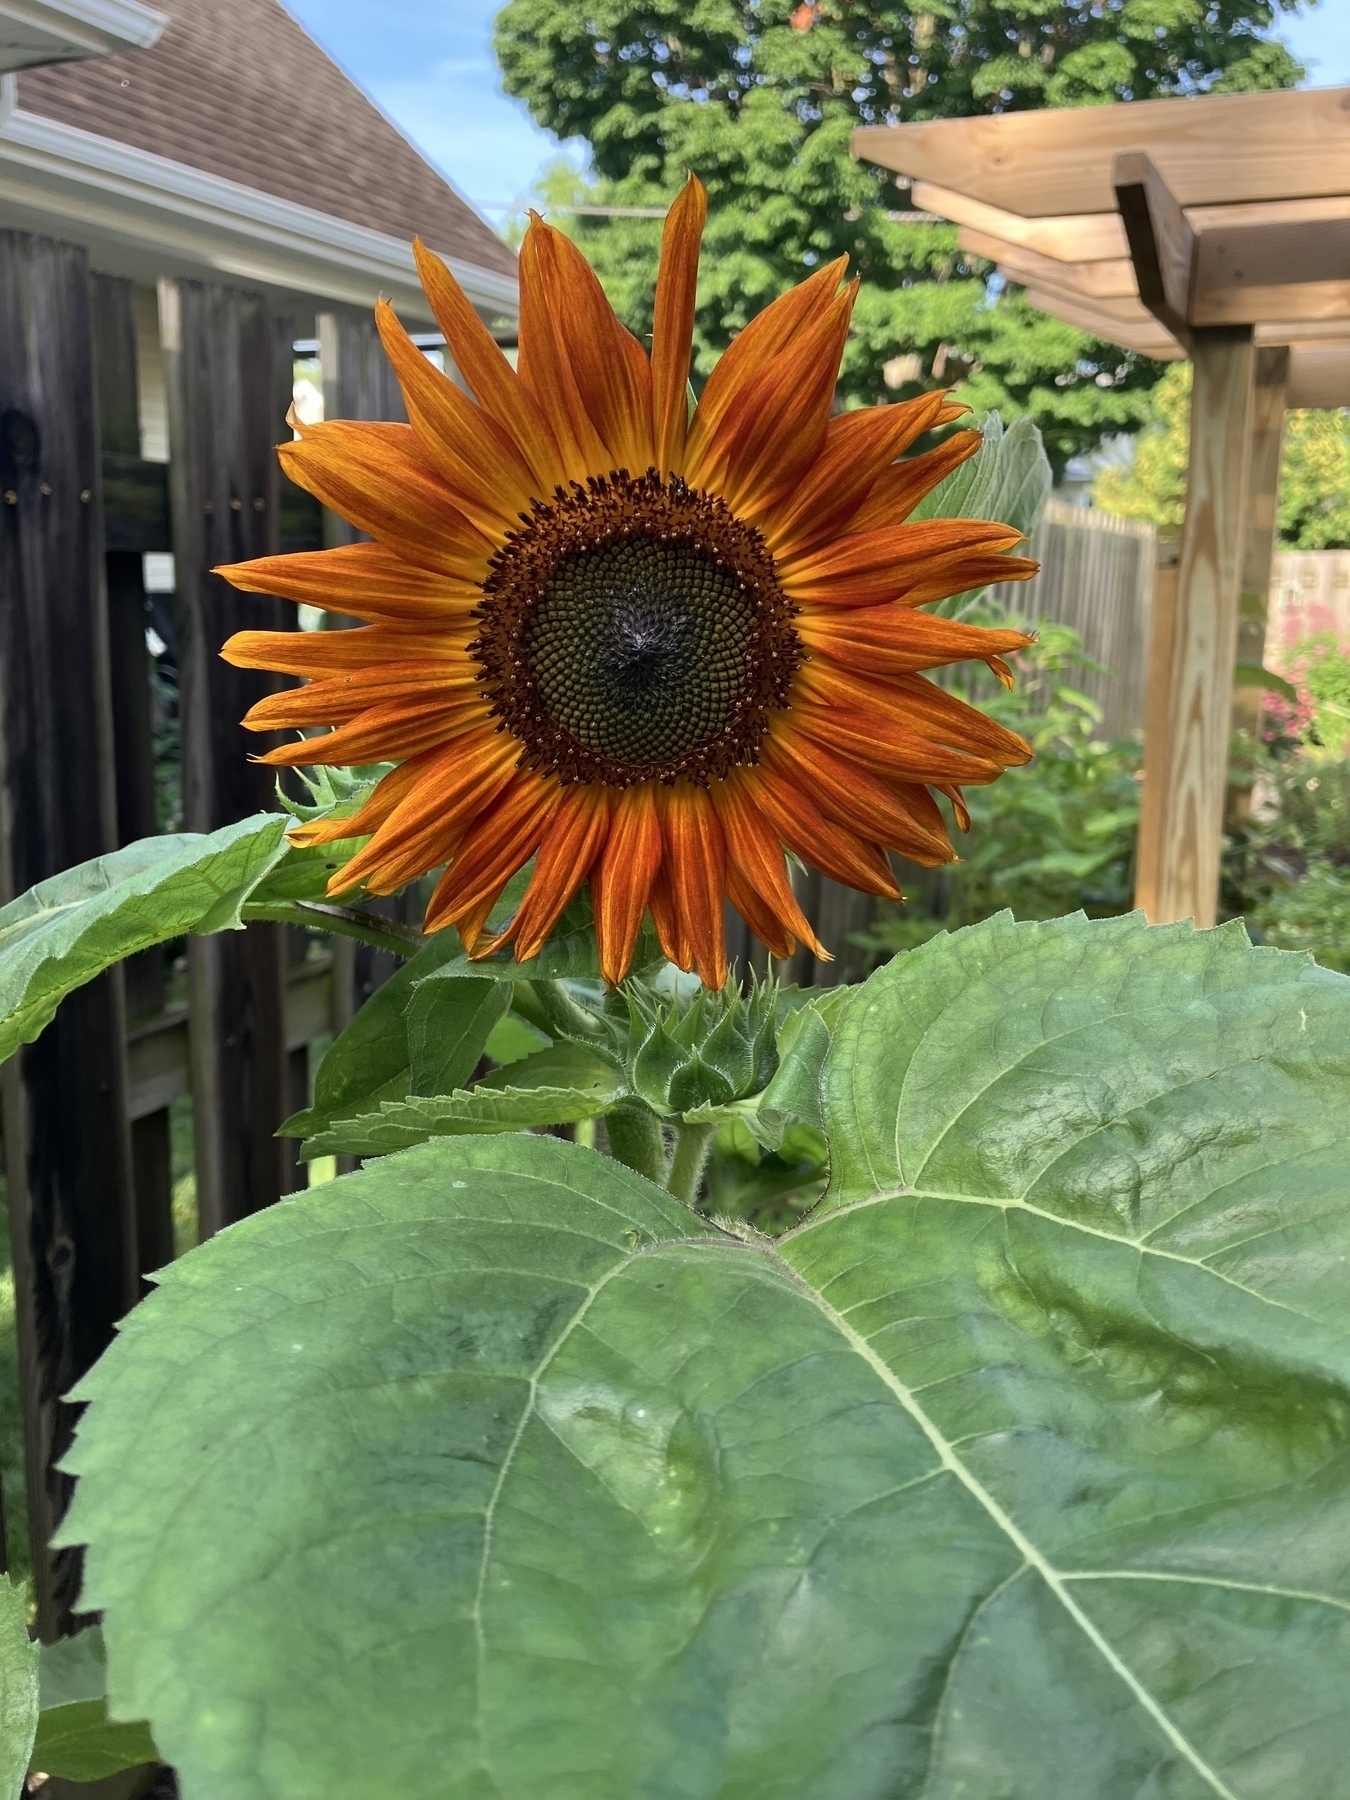 Sunflower with orange-yellow petals